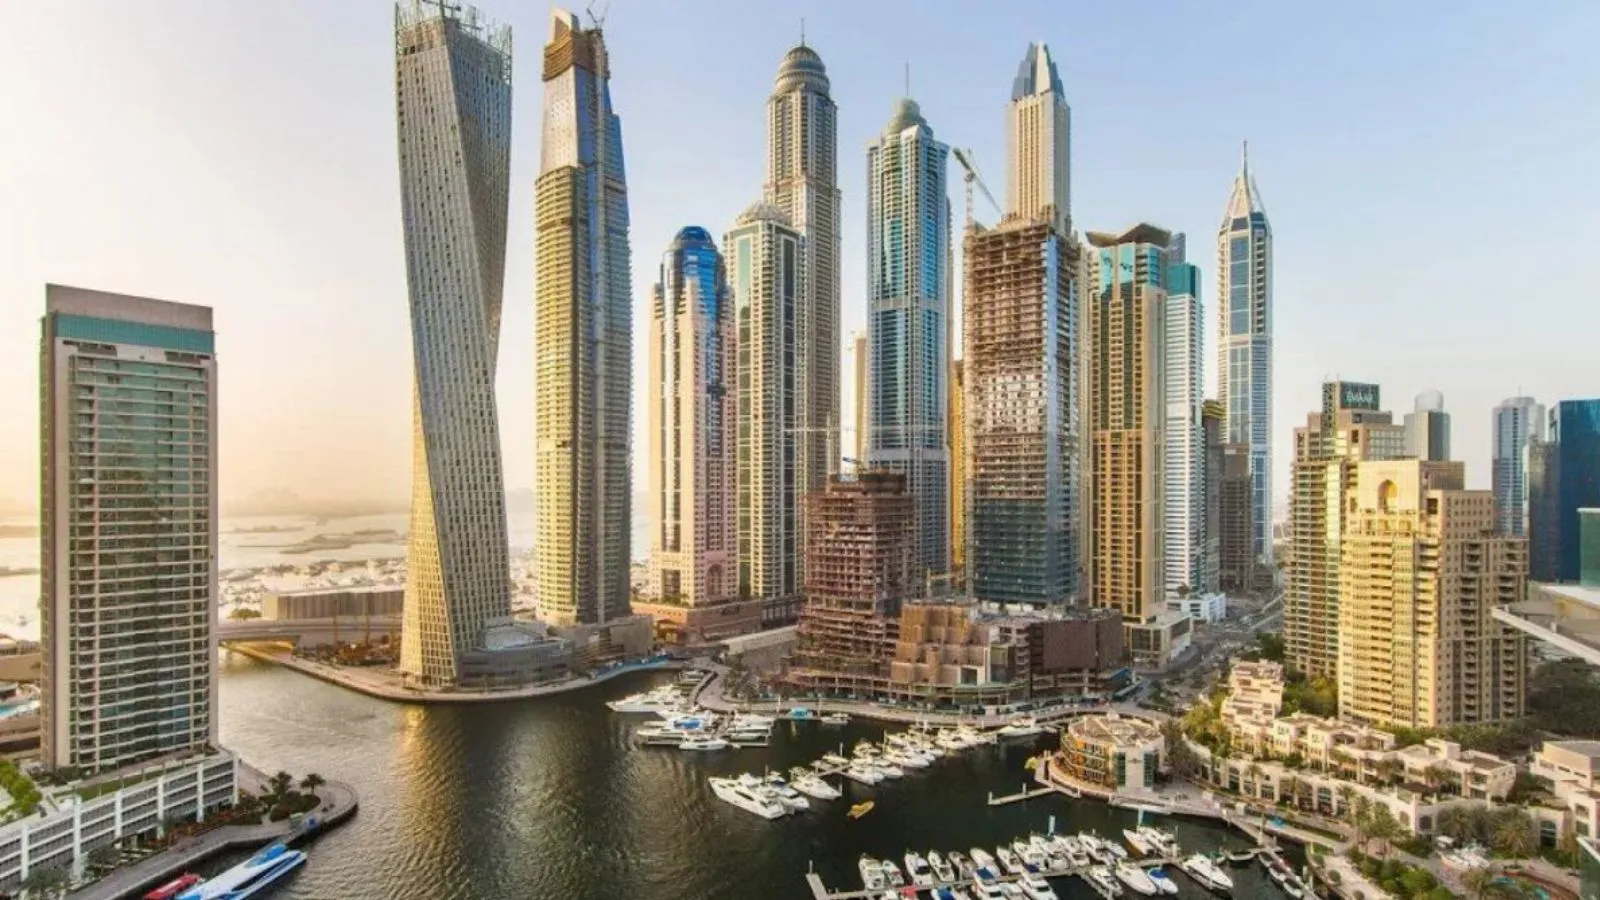 Dubai Over 80% of property units launched since 2022 sold outدبي: بيع أكثر من 80% من الوحدات العقارية التي تم إطلاقها منذ عام 2022